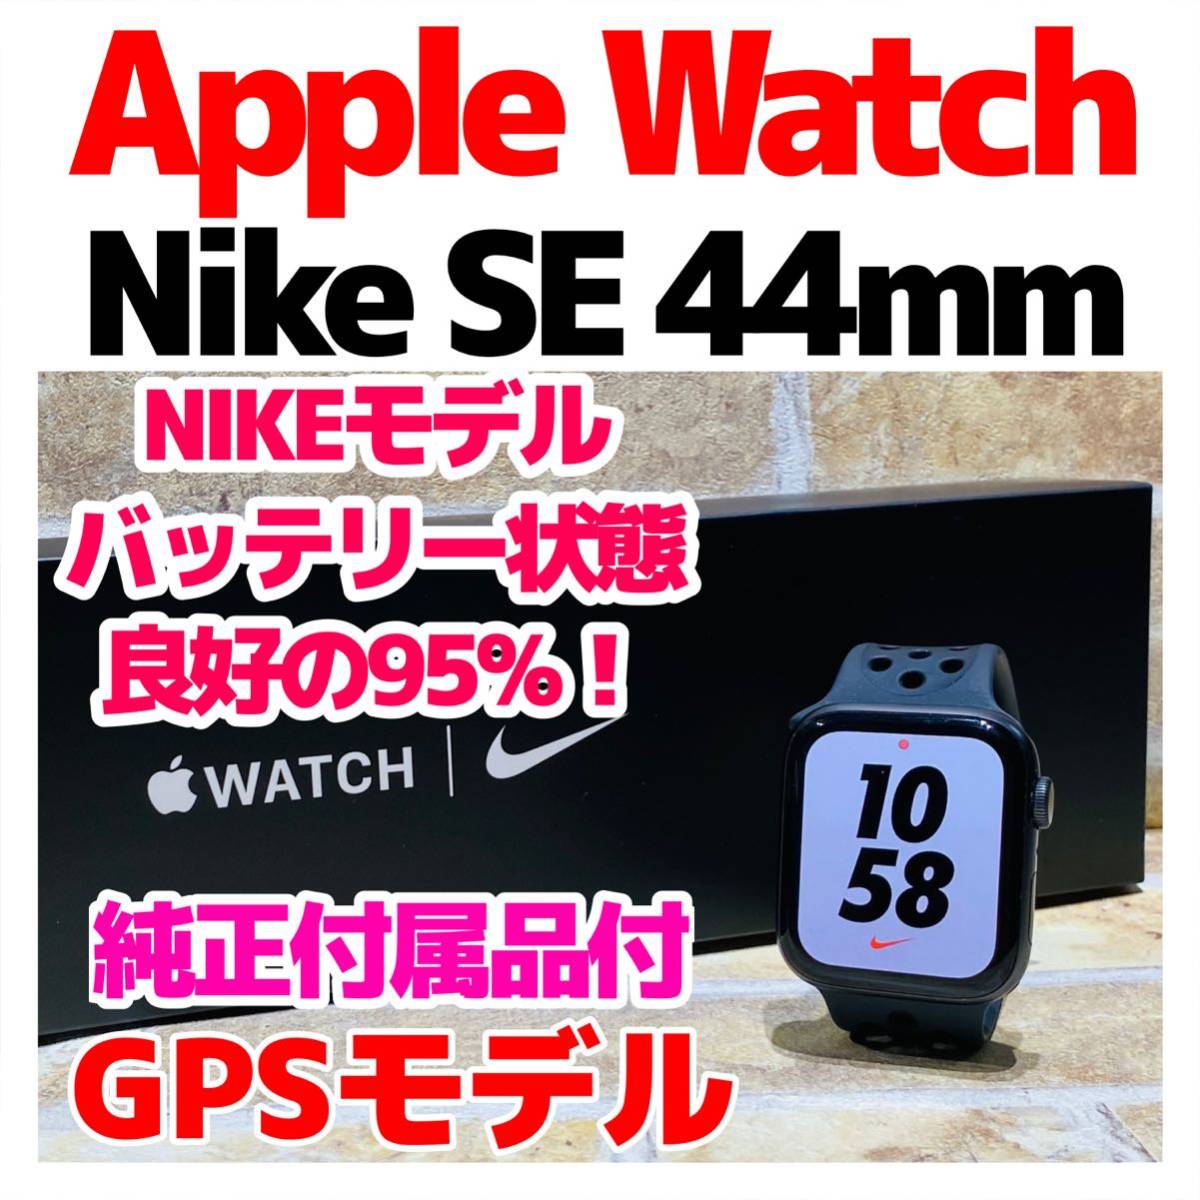 Apple Watch SE NIKEモデル 44mm GPS 230 スペースグレイ 純正付属品